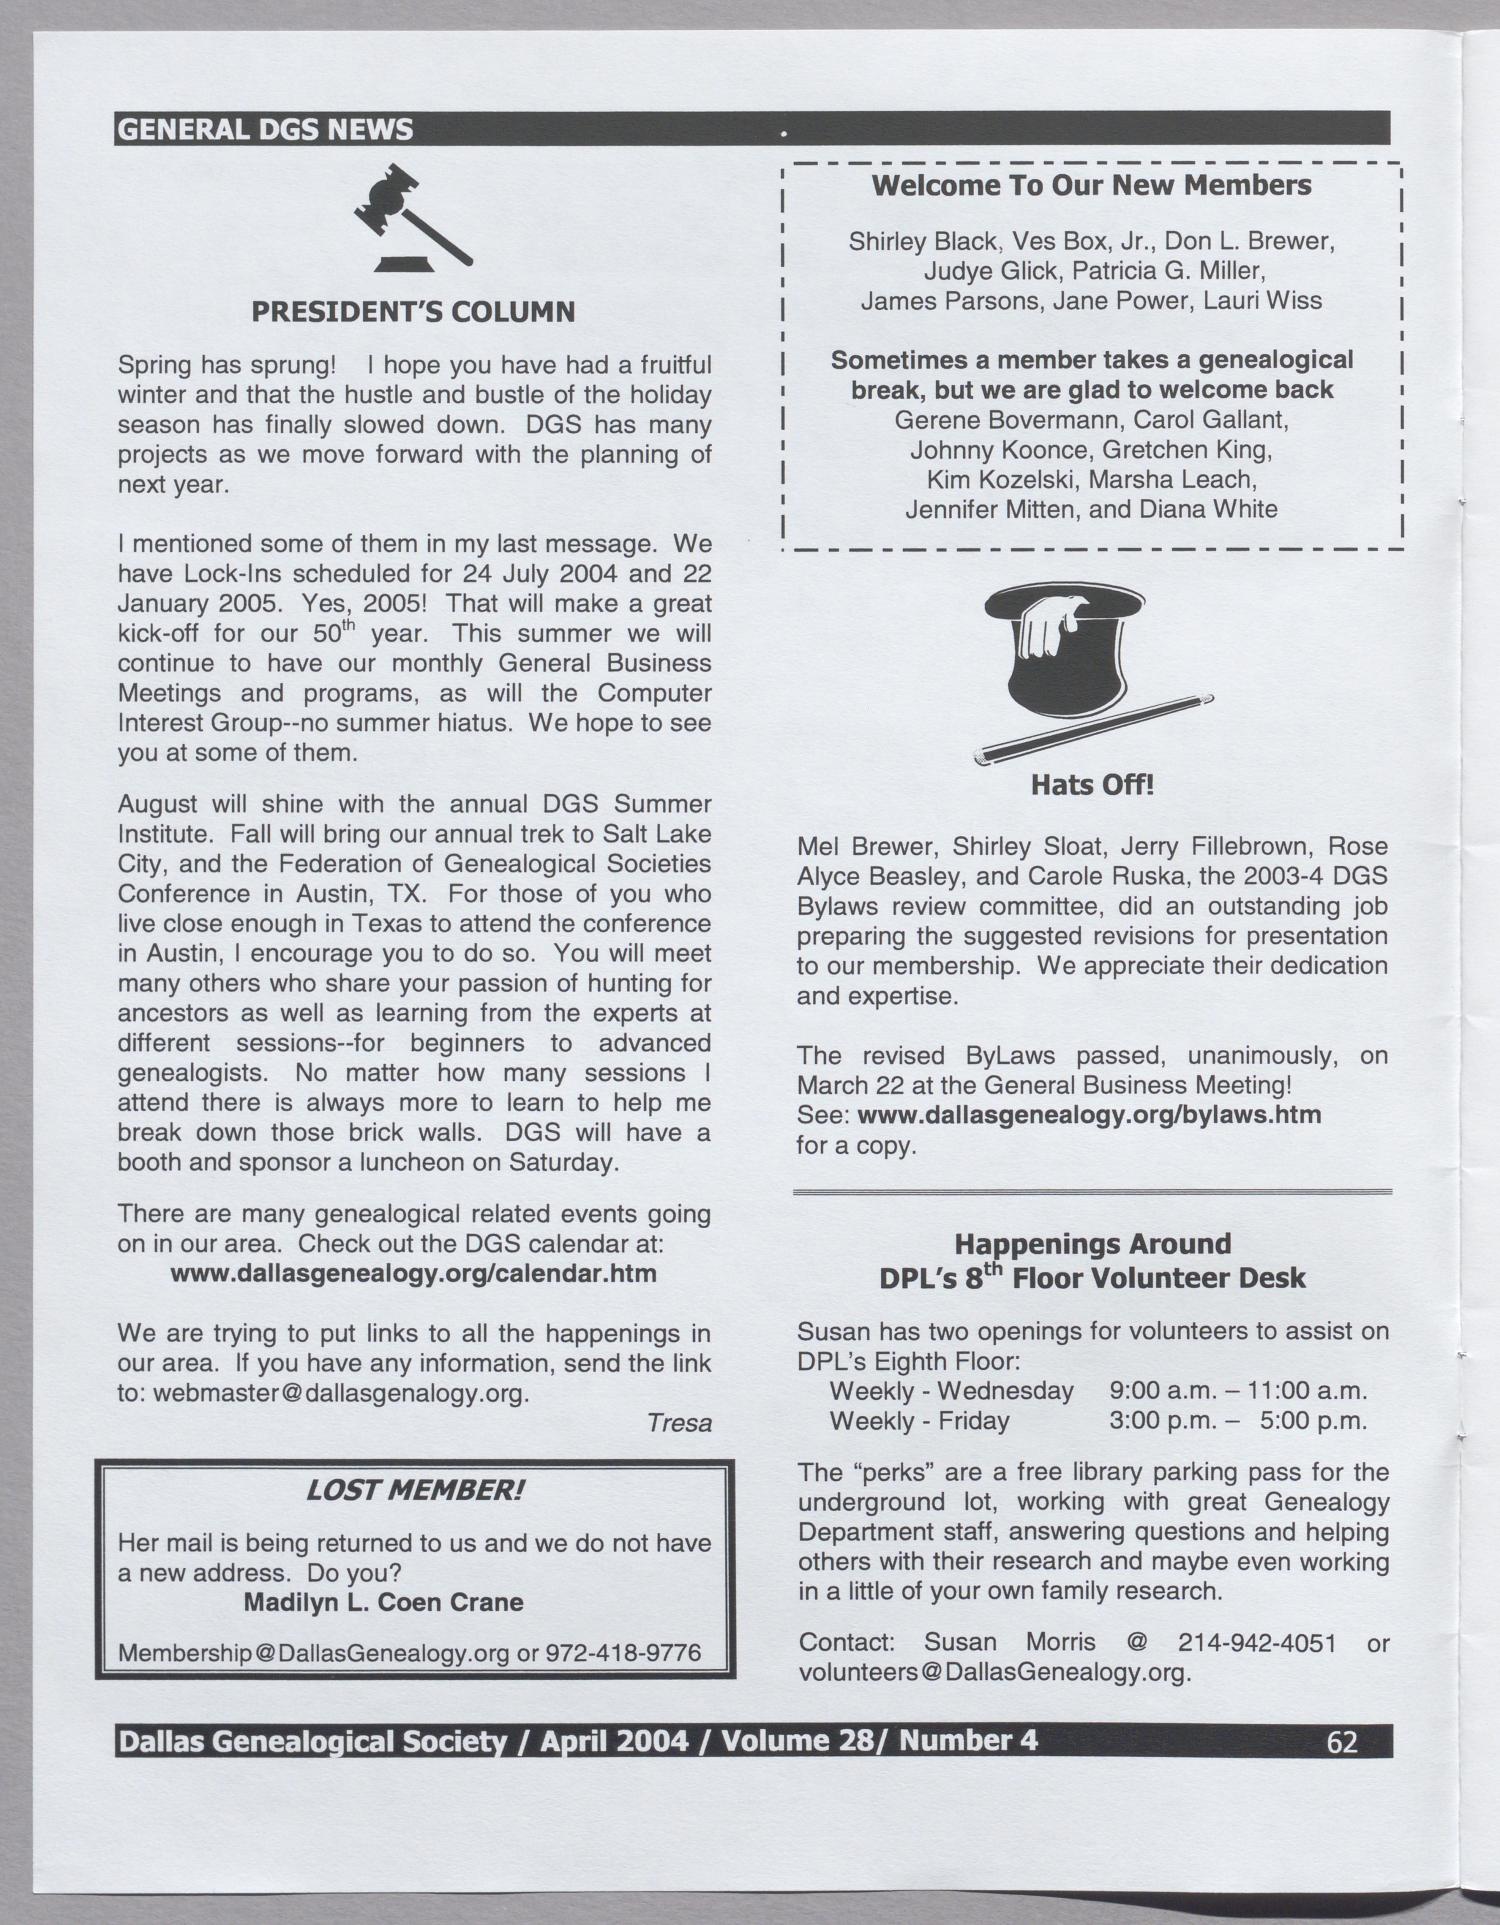 DGS Newsletter, Volume 28, Number 4, April 2004
                                                
                                                    62
                                                